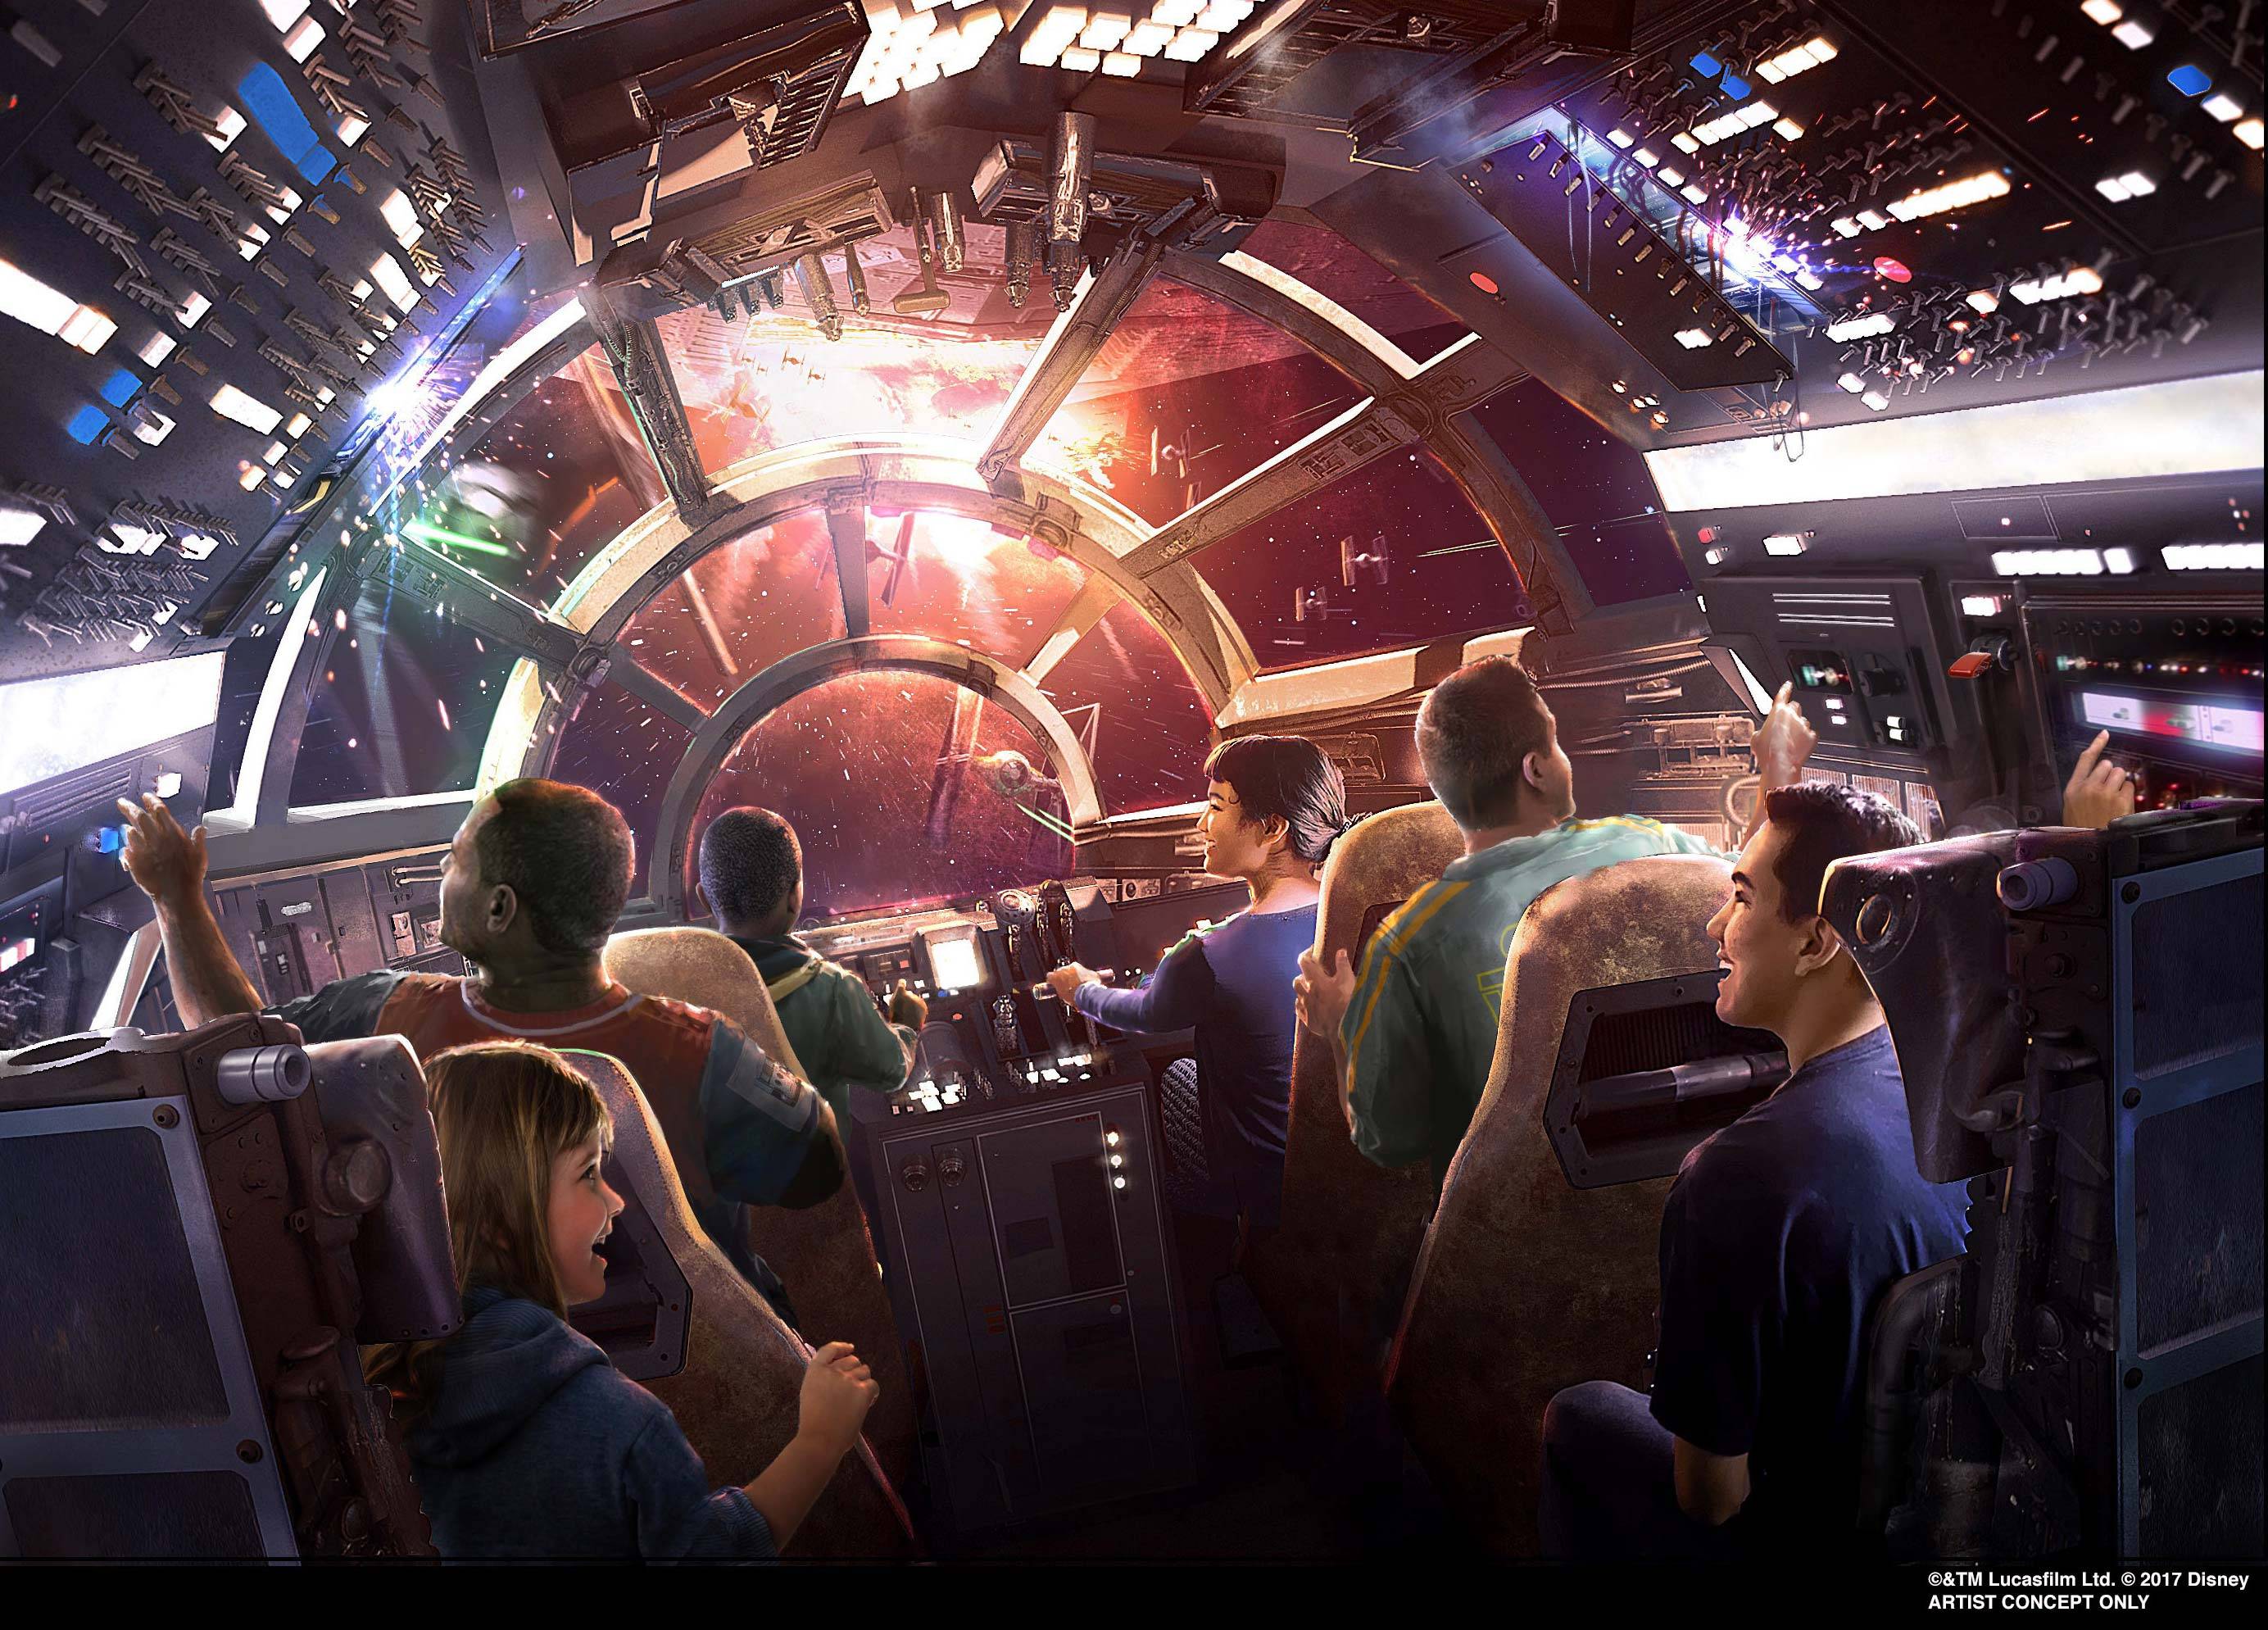 Millennium Falcon ride in Star Wars Galaxy's Edge